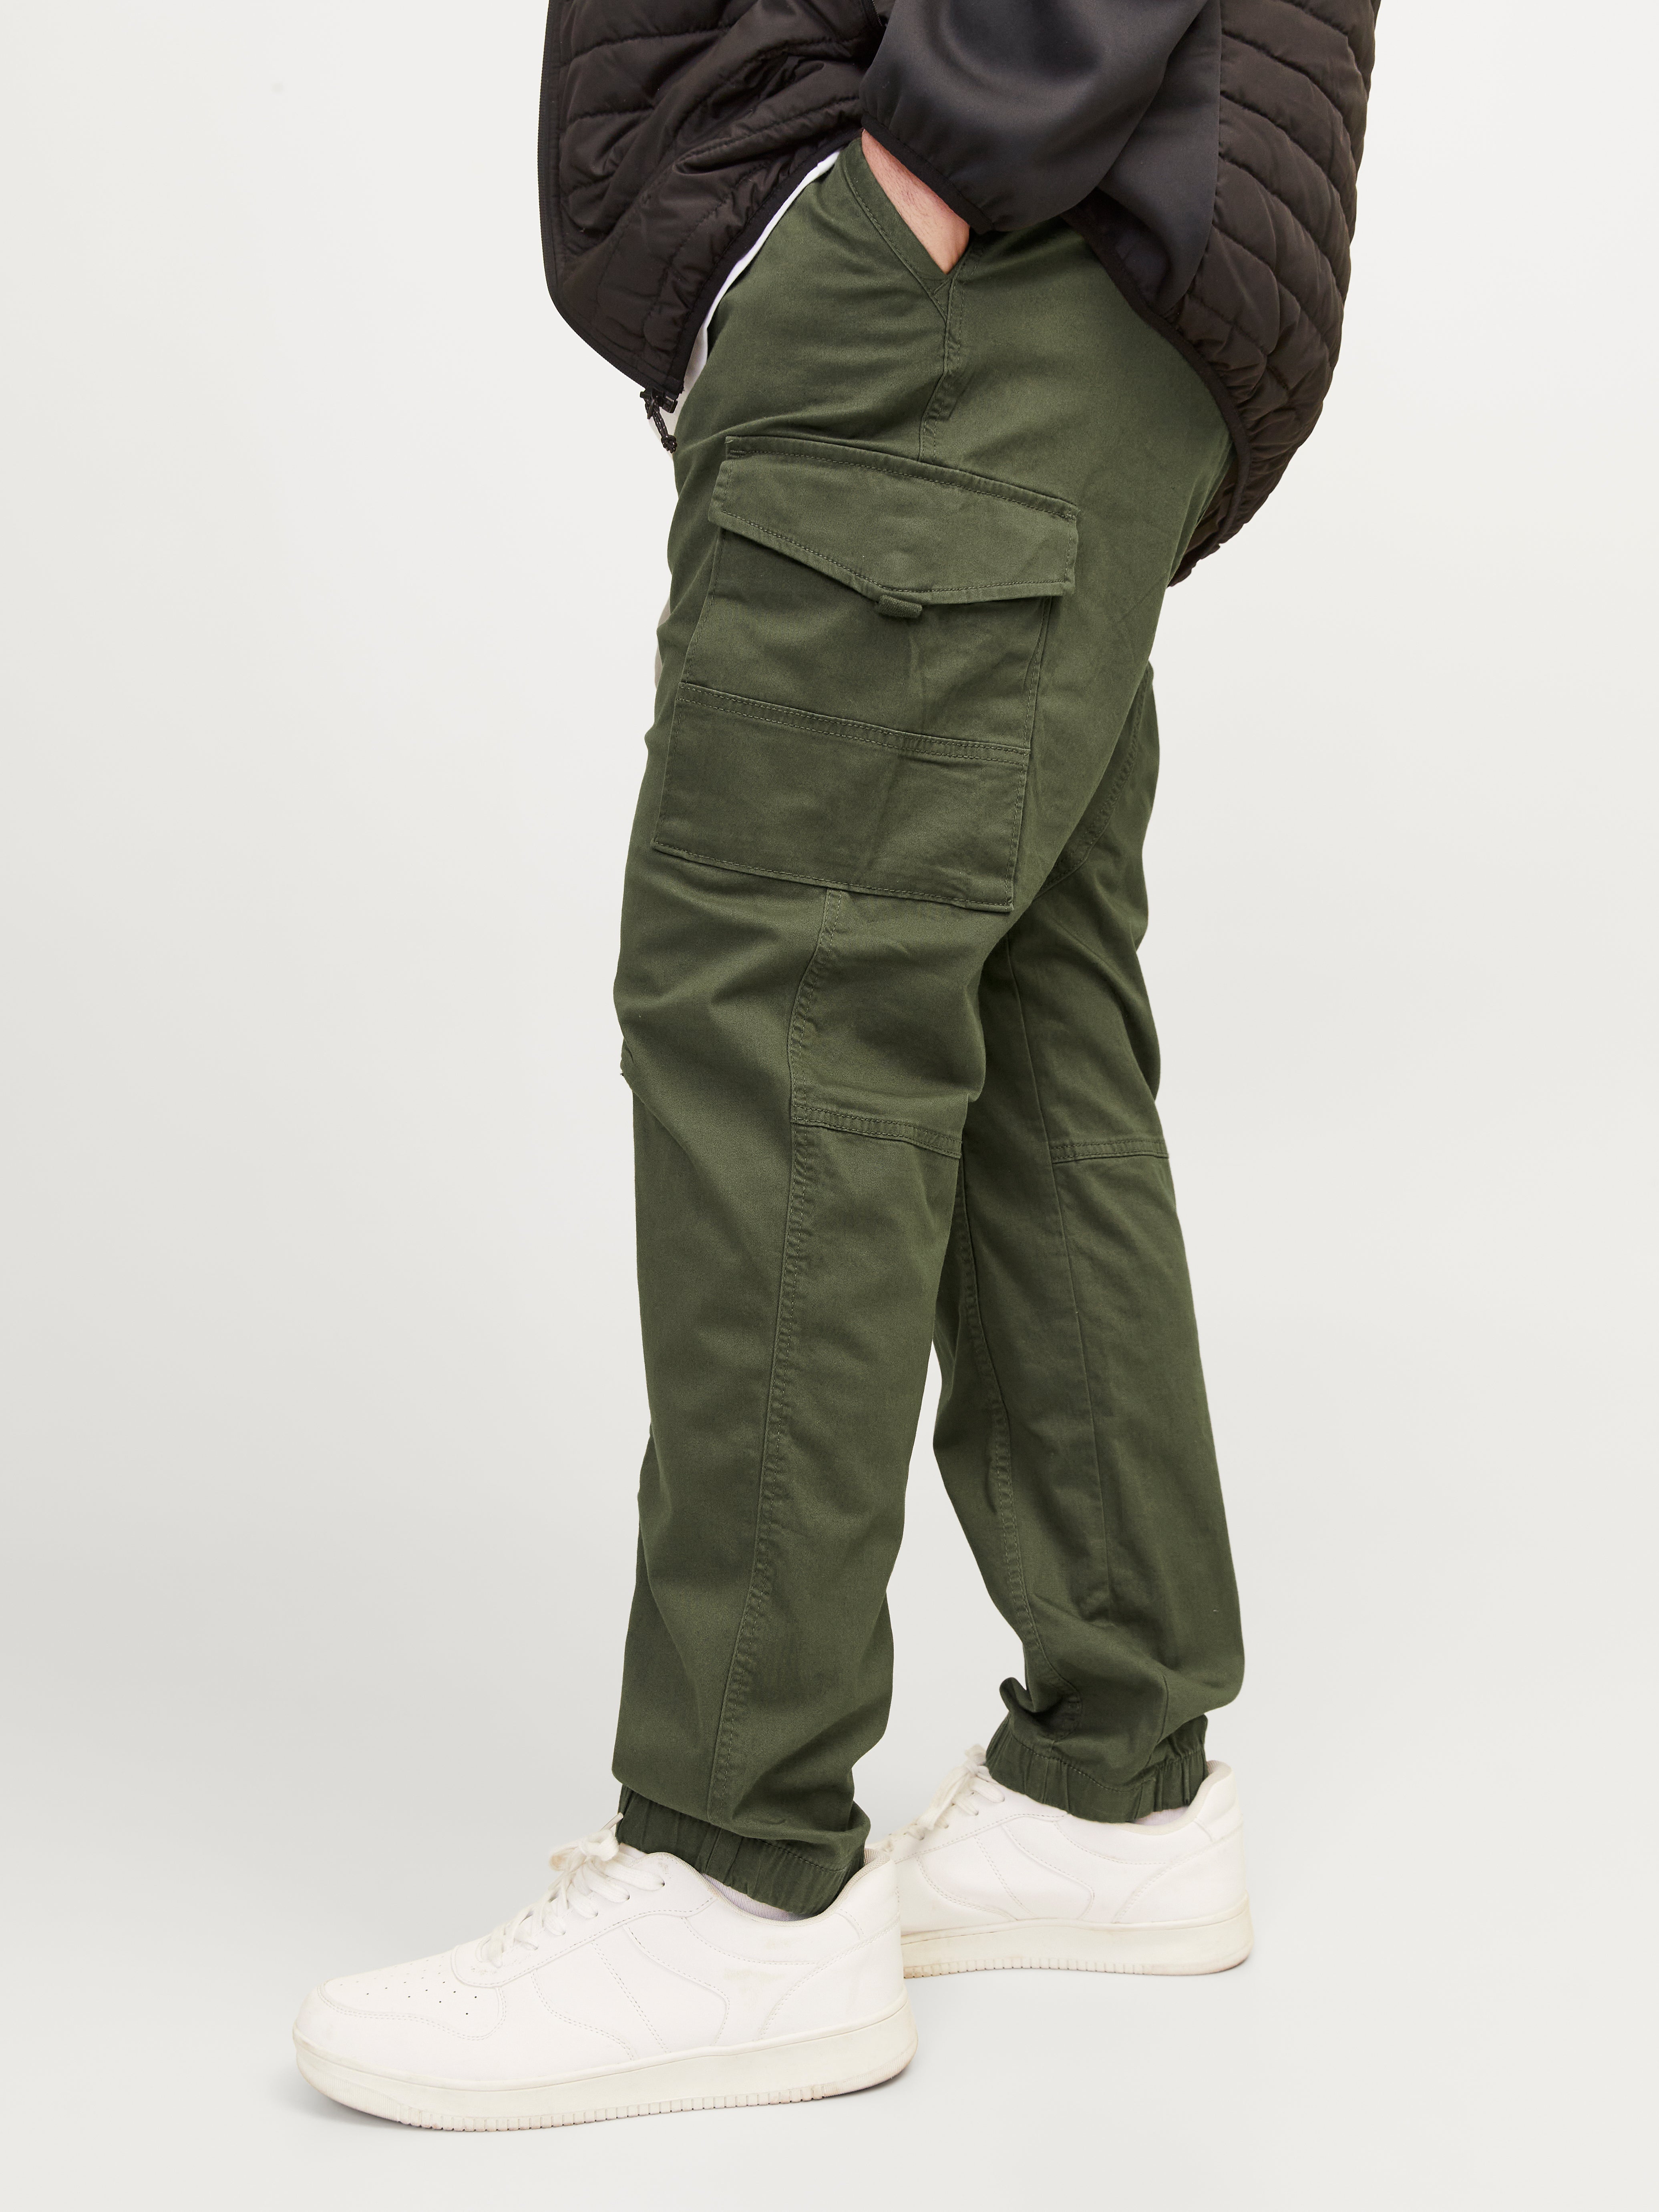 Jack & Jones Bill Cullen Comfortable Casual Stretch Loose Fit Cargo Trouser  | eBay